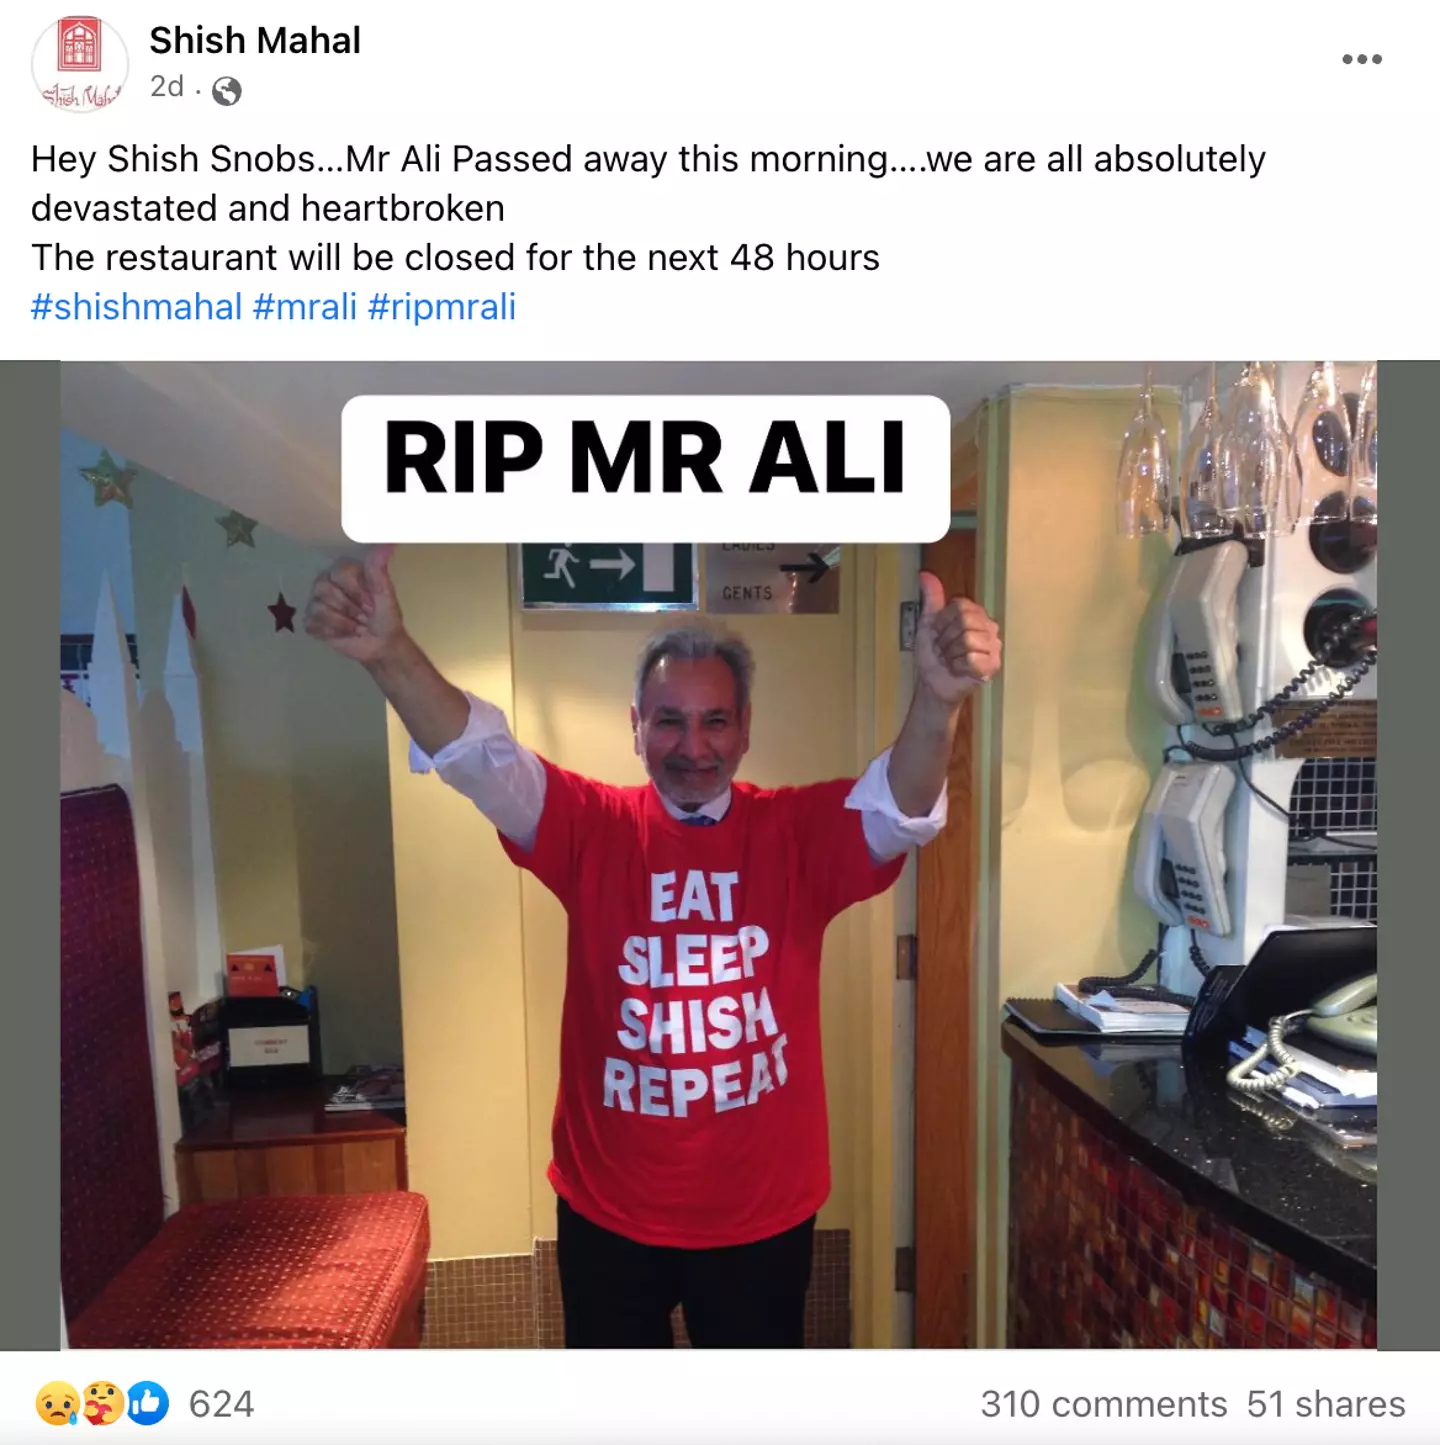 His restaurant confirmed the news on social media.